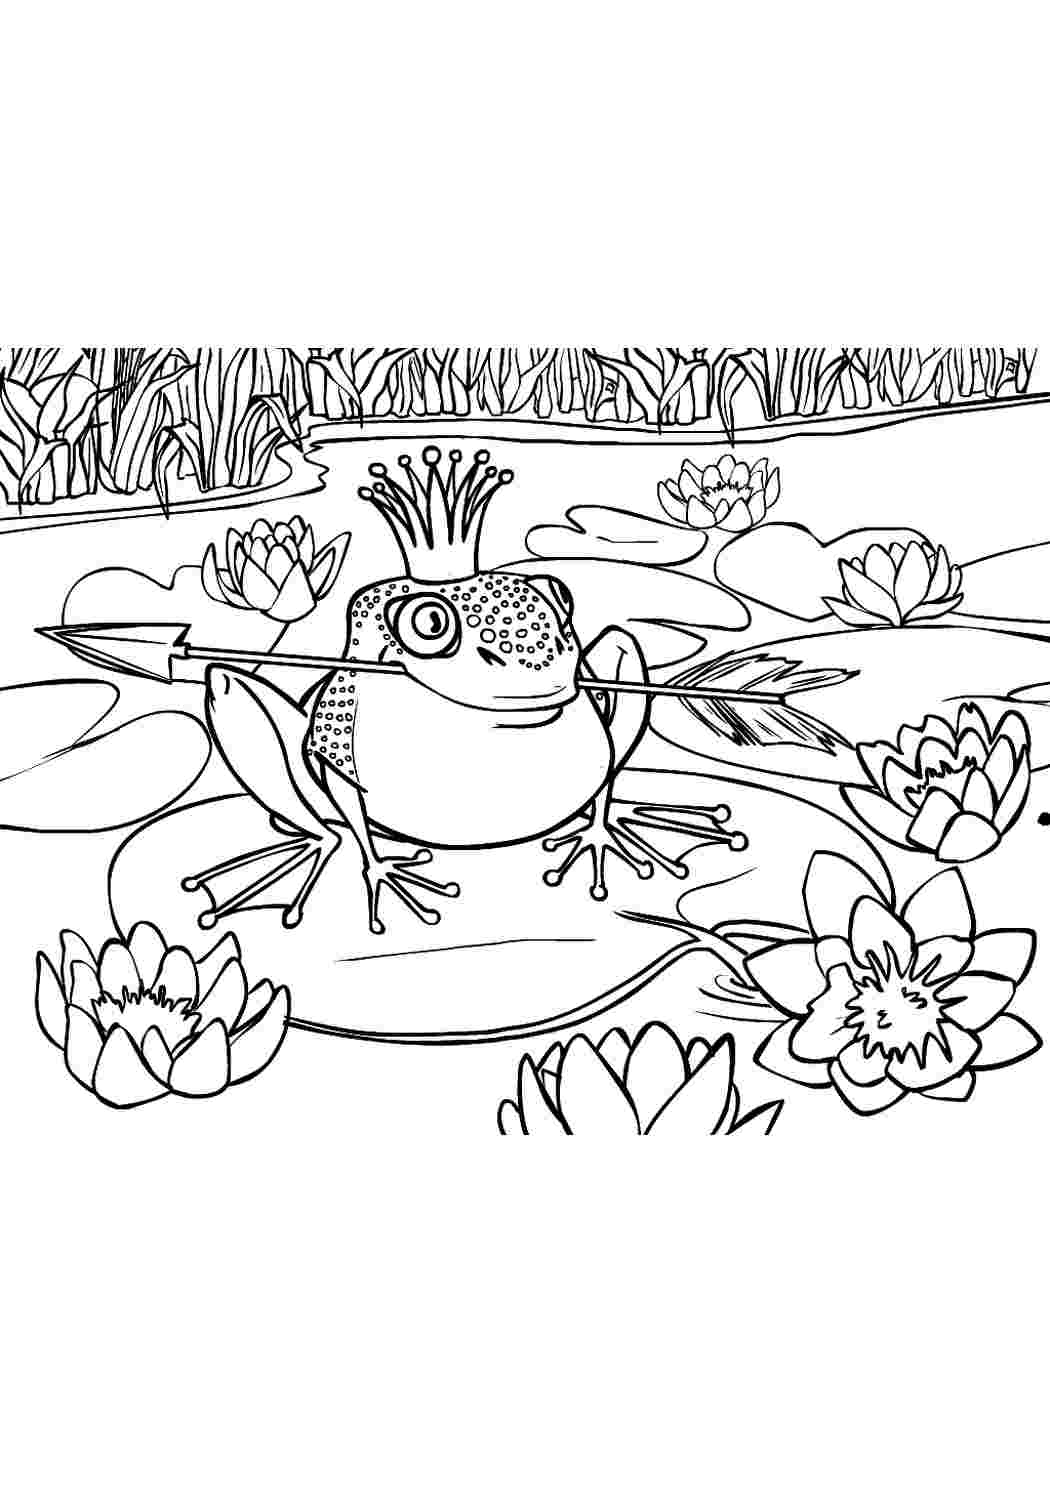 Рисунок раскраска к сказке царевна лягушка